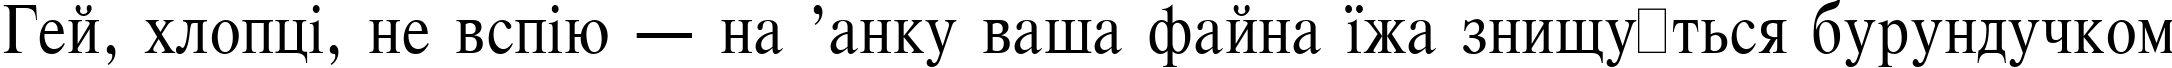 Пример написания шрифтом Respect Narrow Plain:001.001 текста на украинском